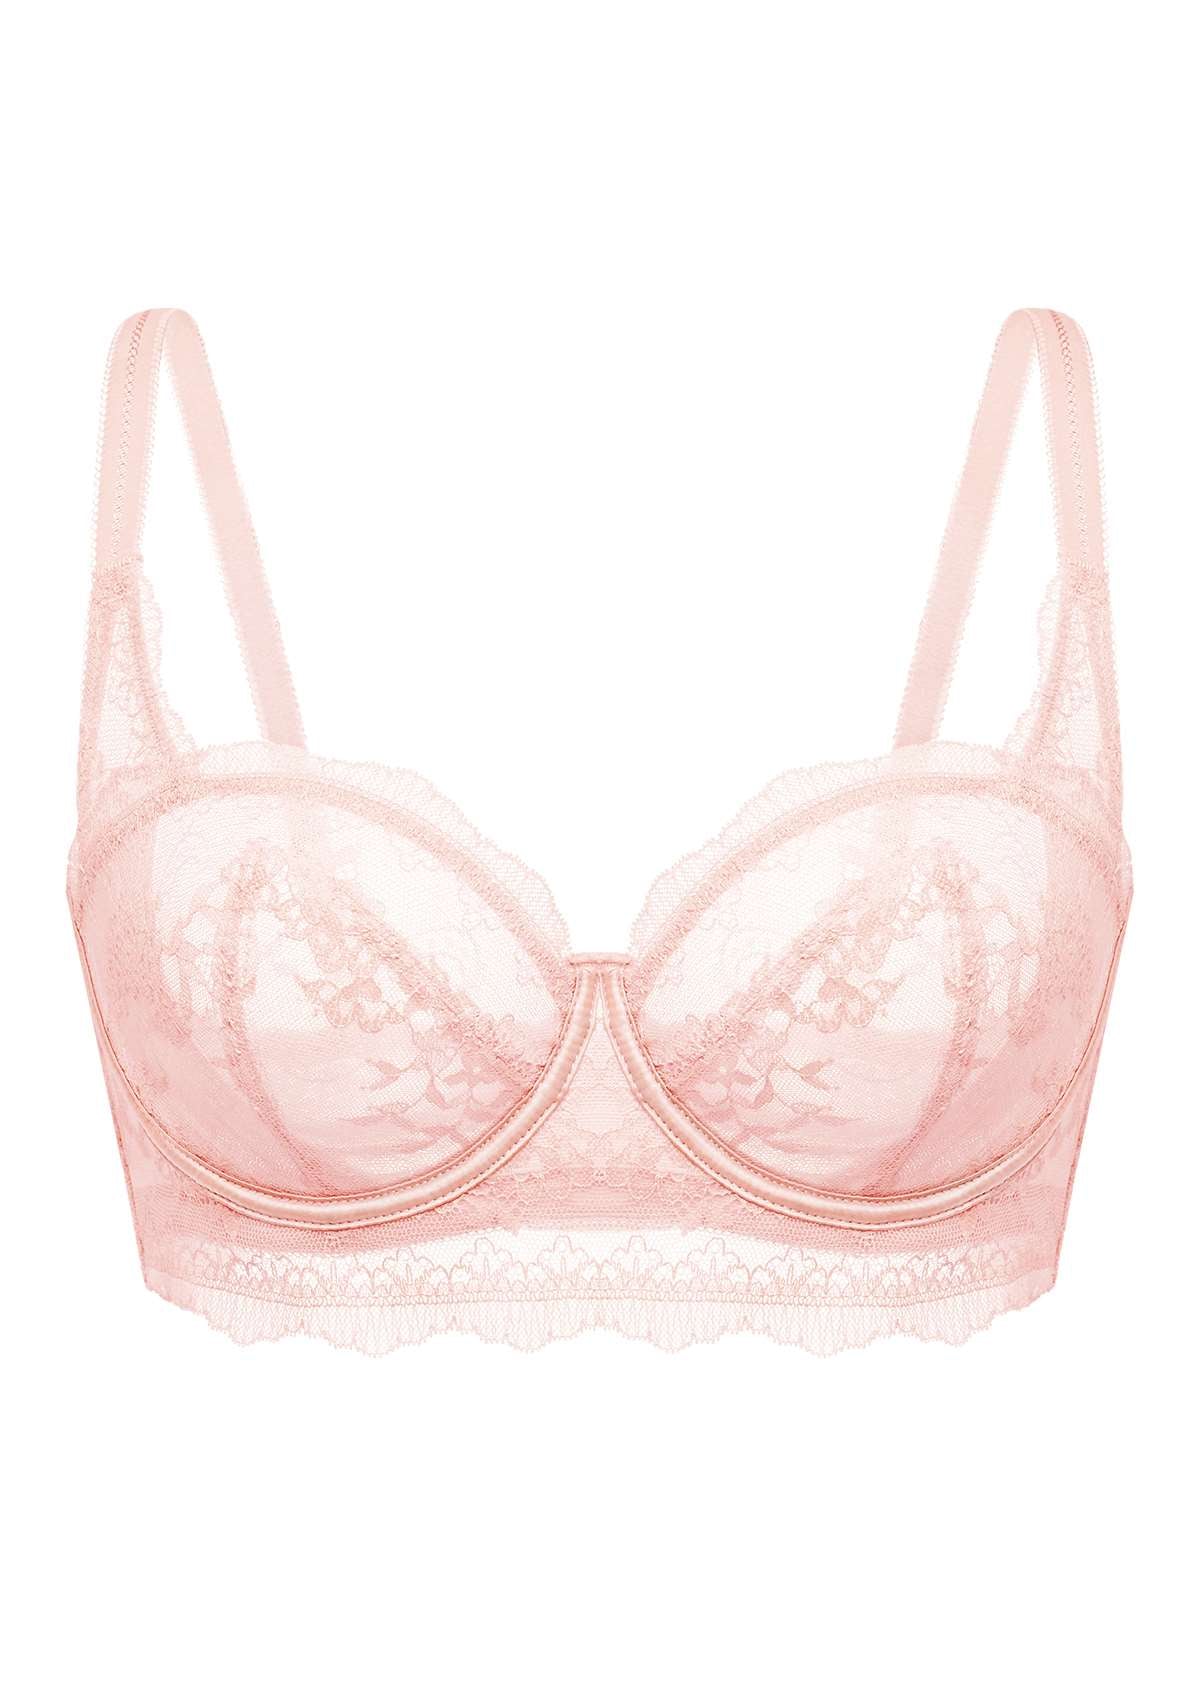 HSIA Floral Lace Unlined Bridal Balconette Delicate Bra Panty Set - Pink / 38 / D